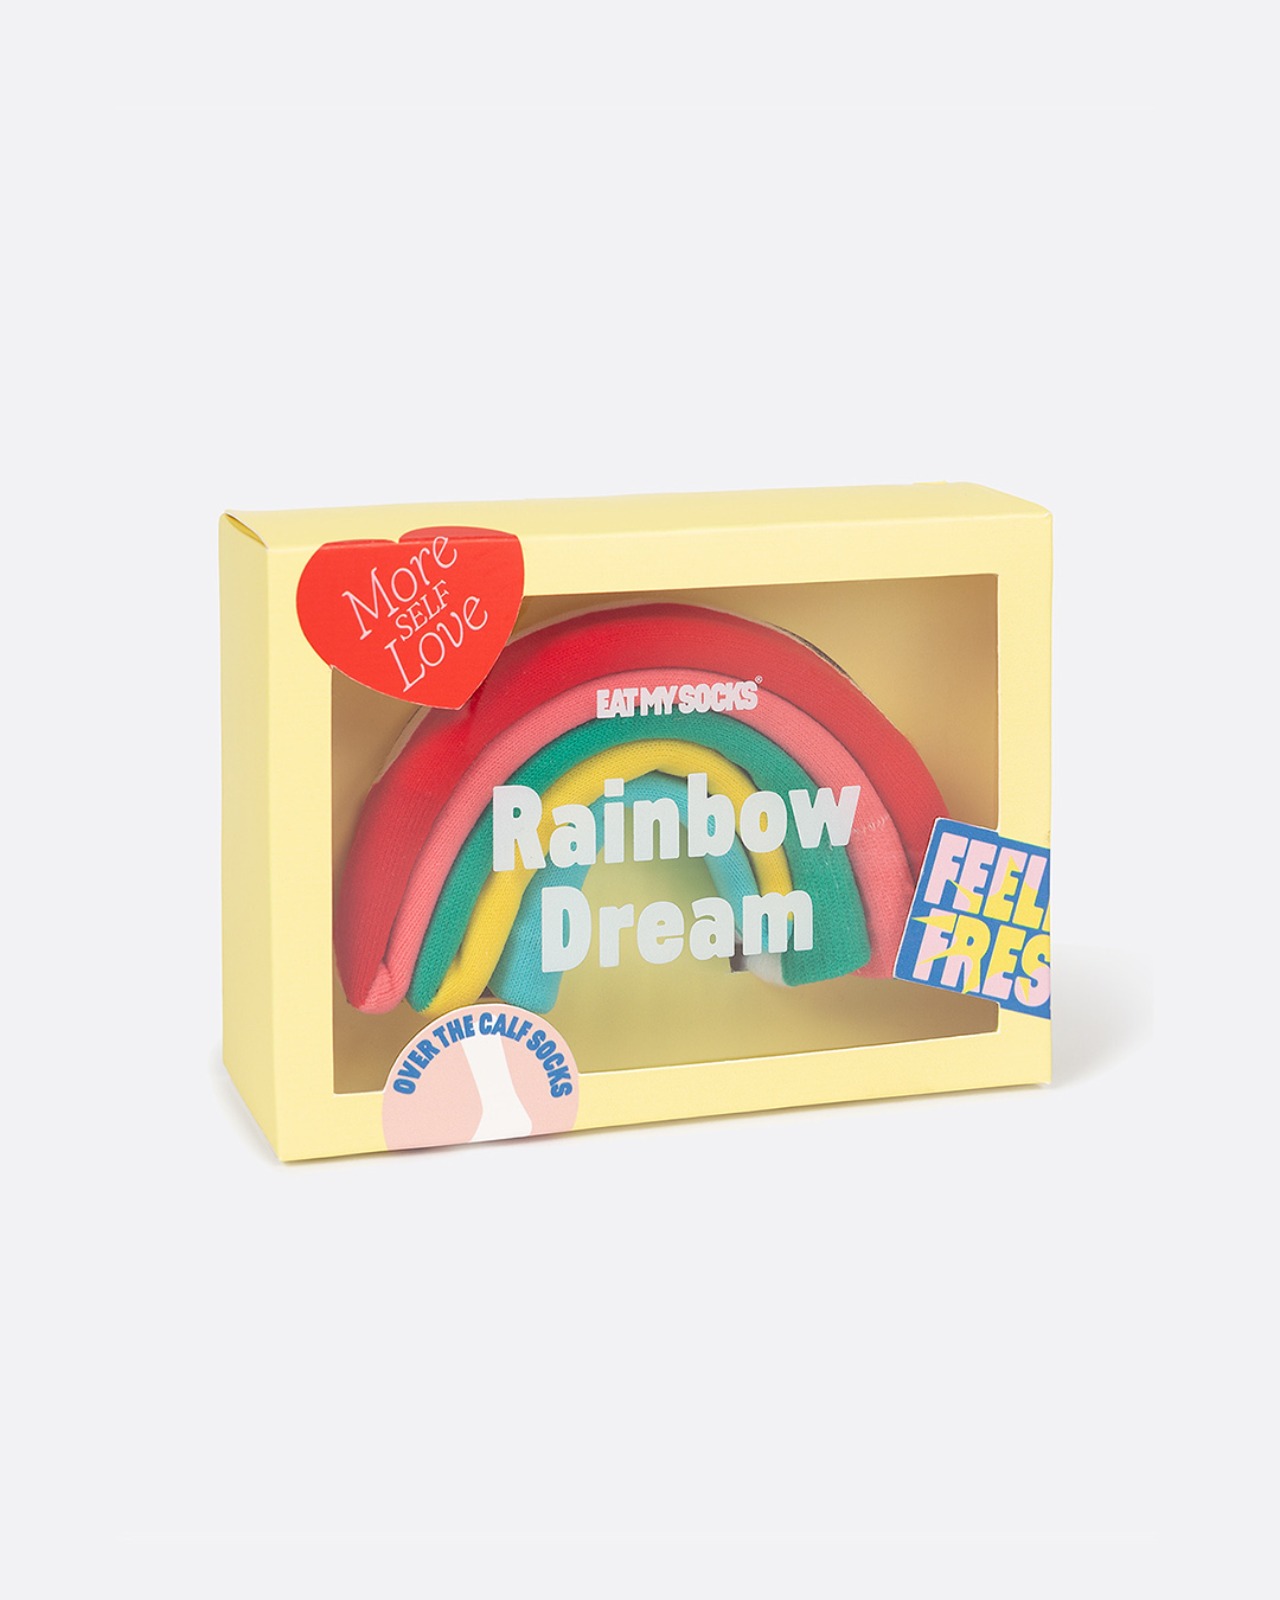 [EAT MY SOCKS] Rainbow Dream, Pinky